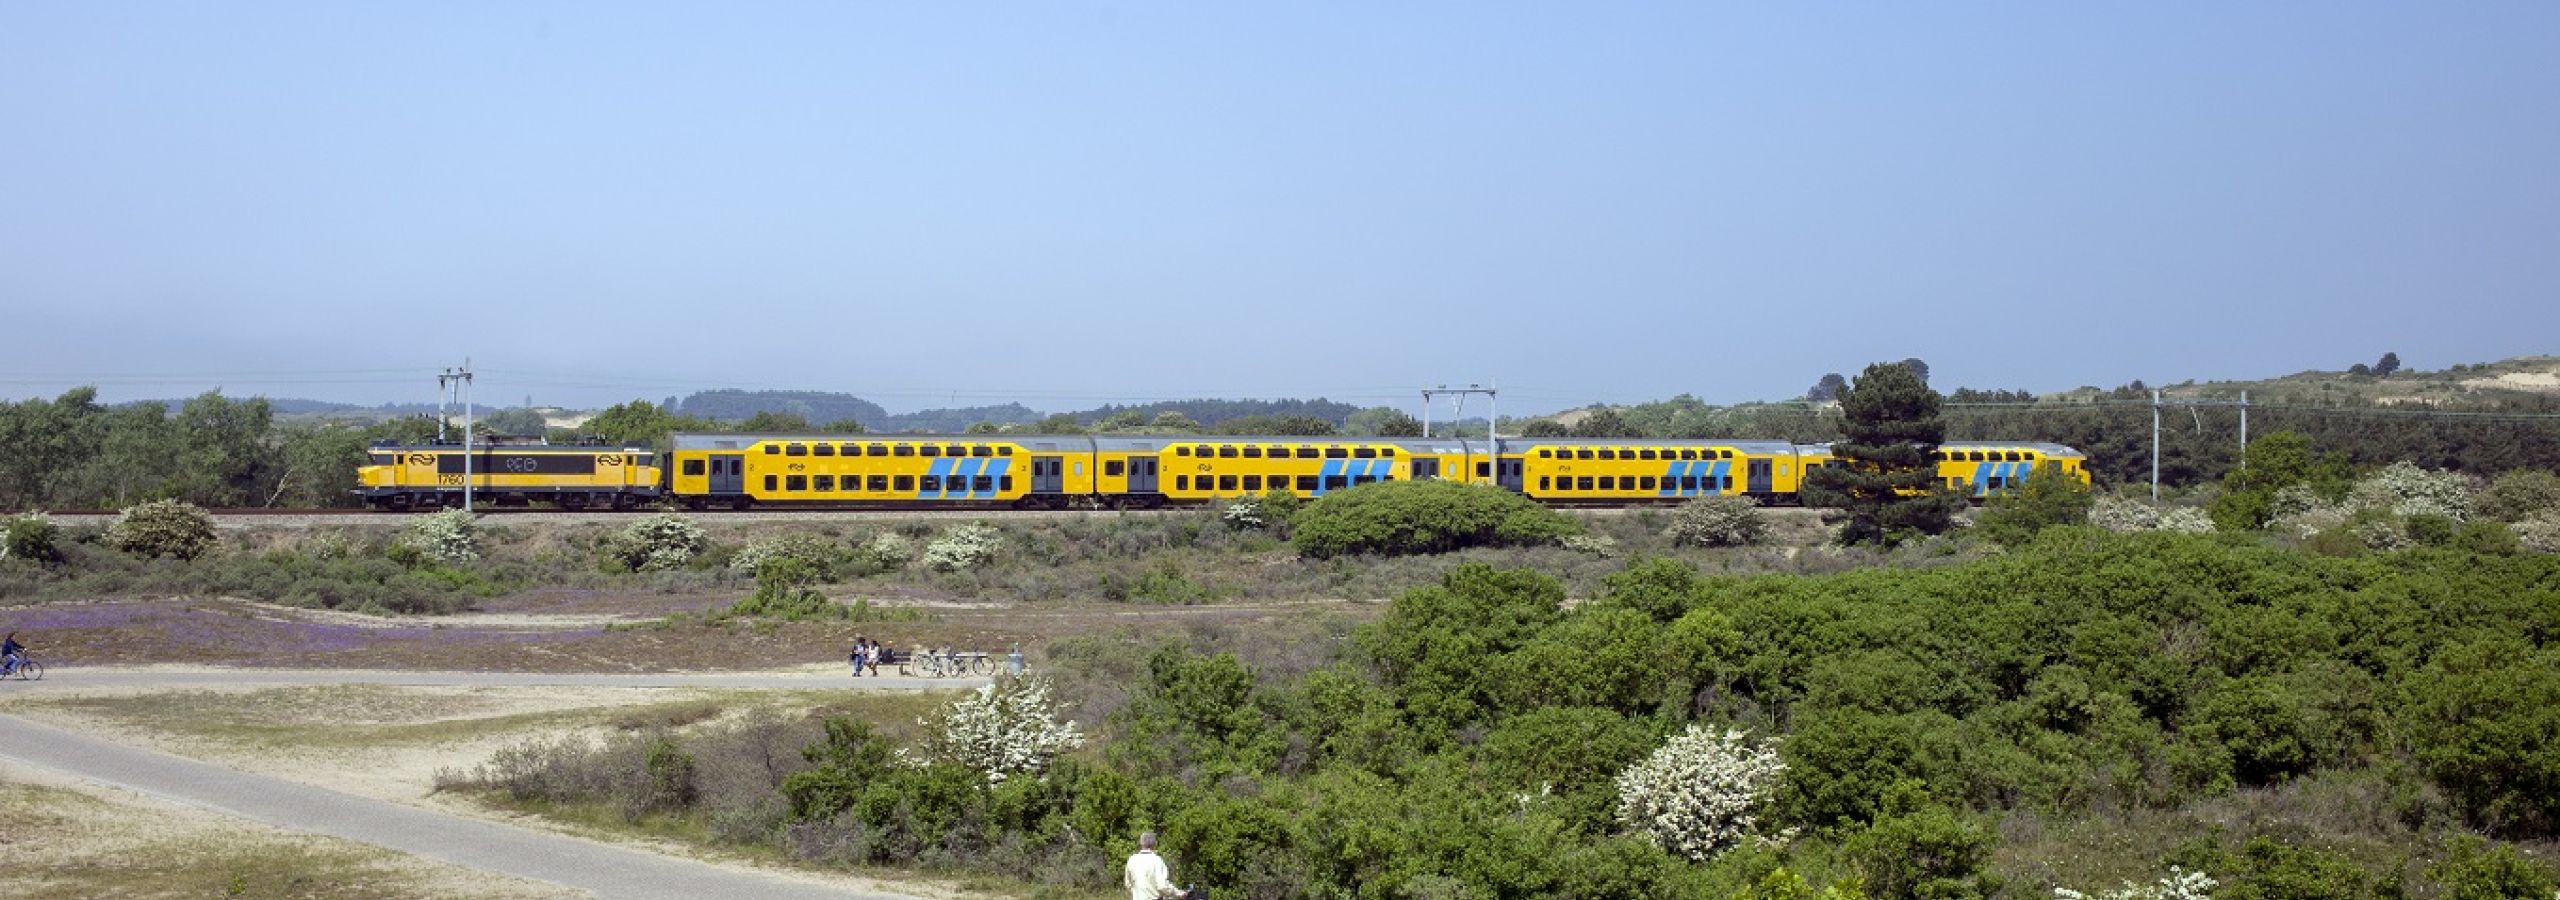 NS-trein onderweg naar Zandvoort